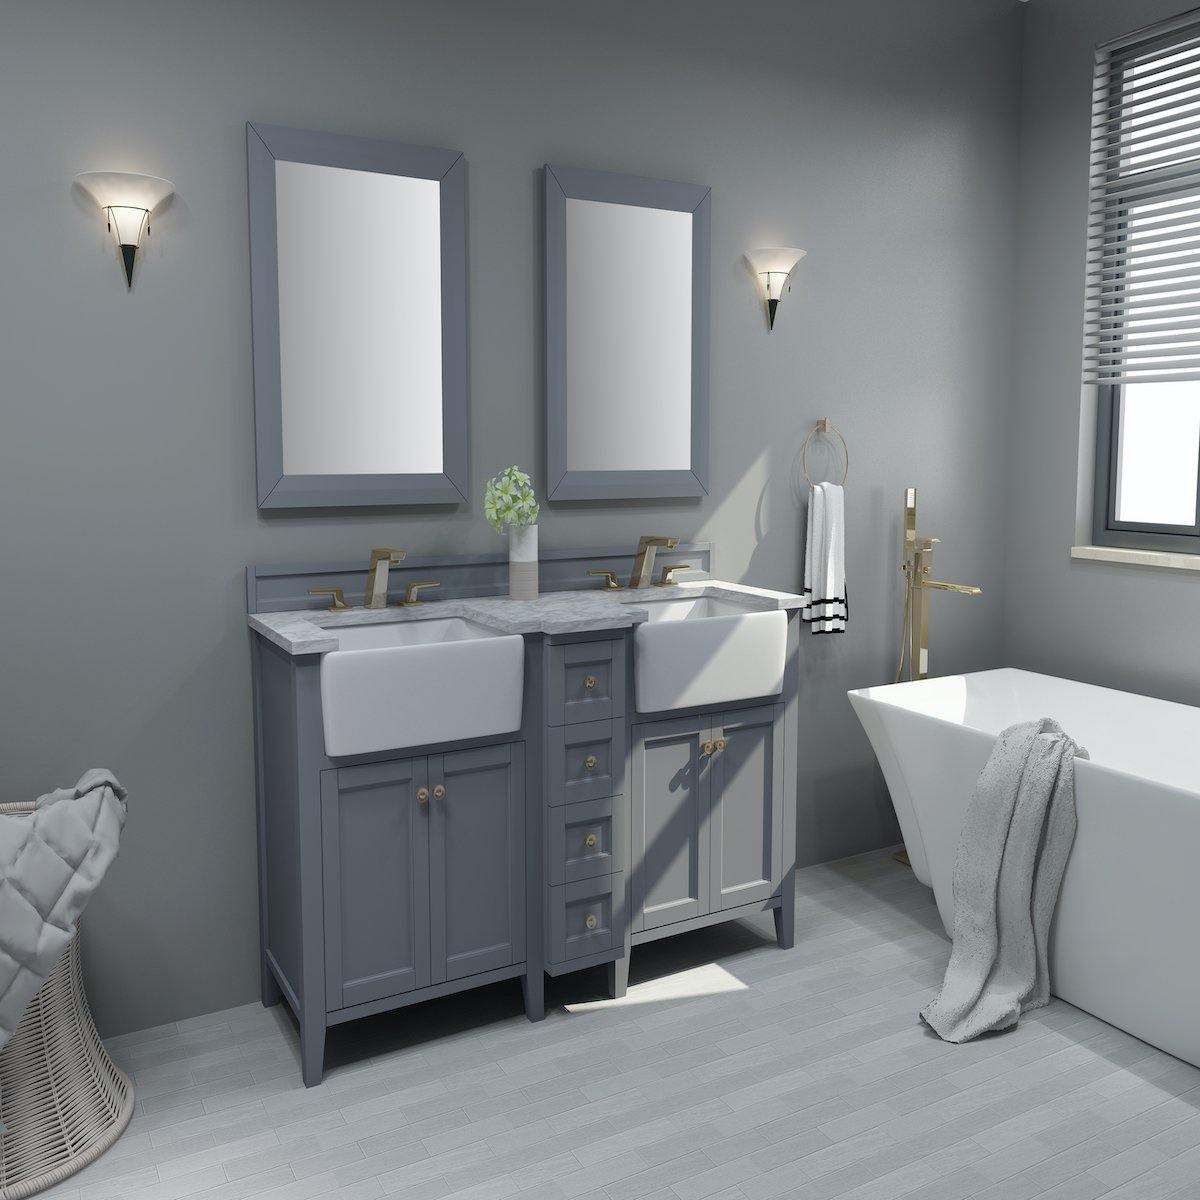 Ancerre Designs Adeline 60 Inch Sapphire Gray Double Vanity in Bathroom #finish_sapphire gray